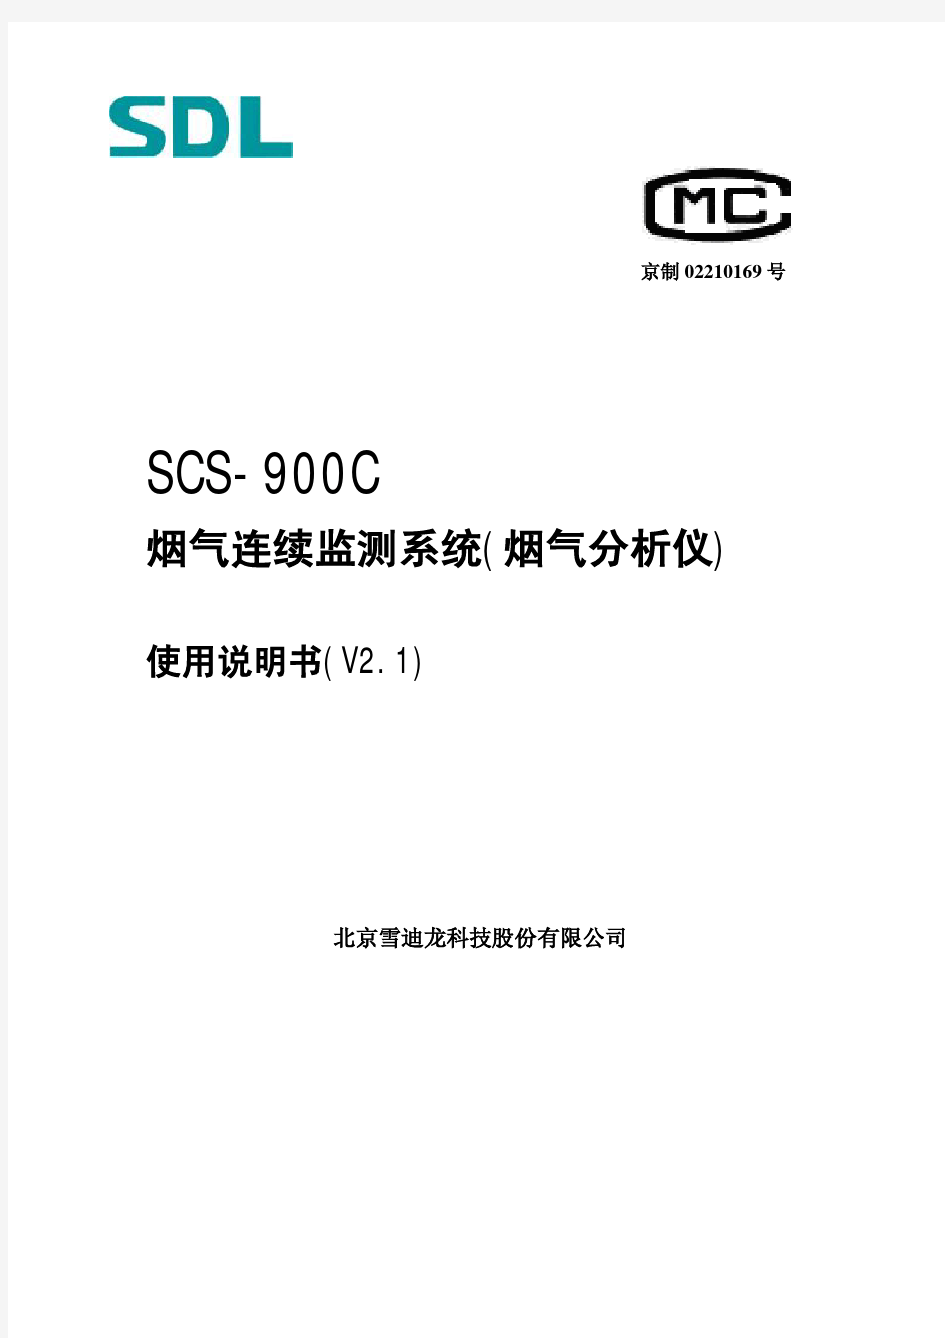 SCS900C烟气连续监测系统使用说明书V2.1.pdf